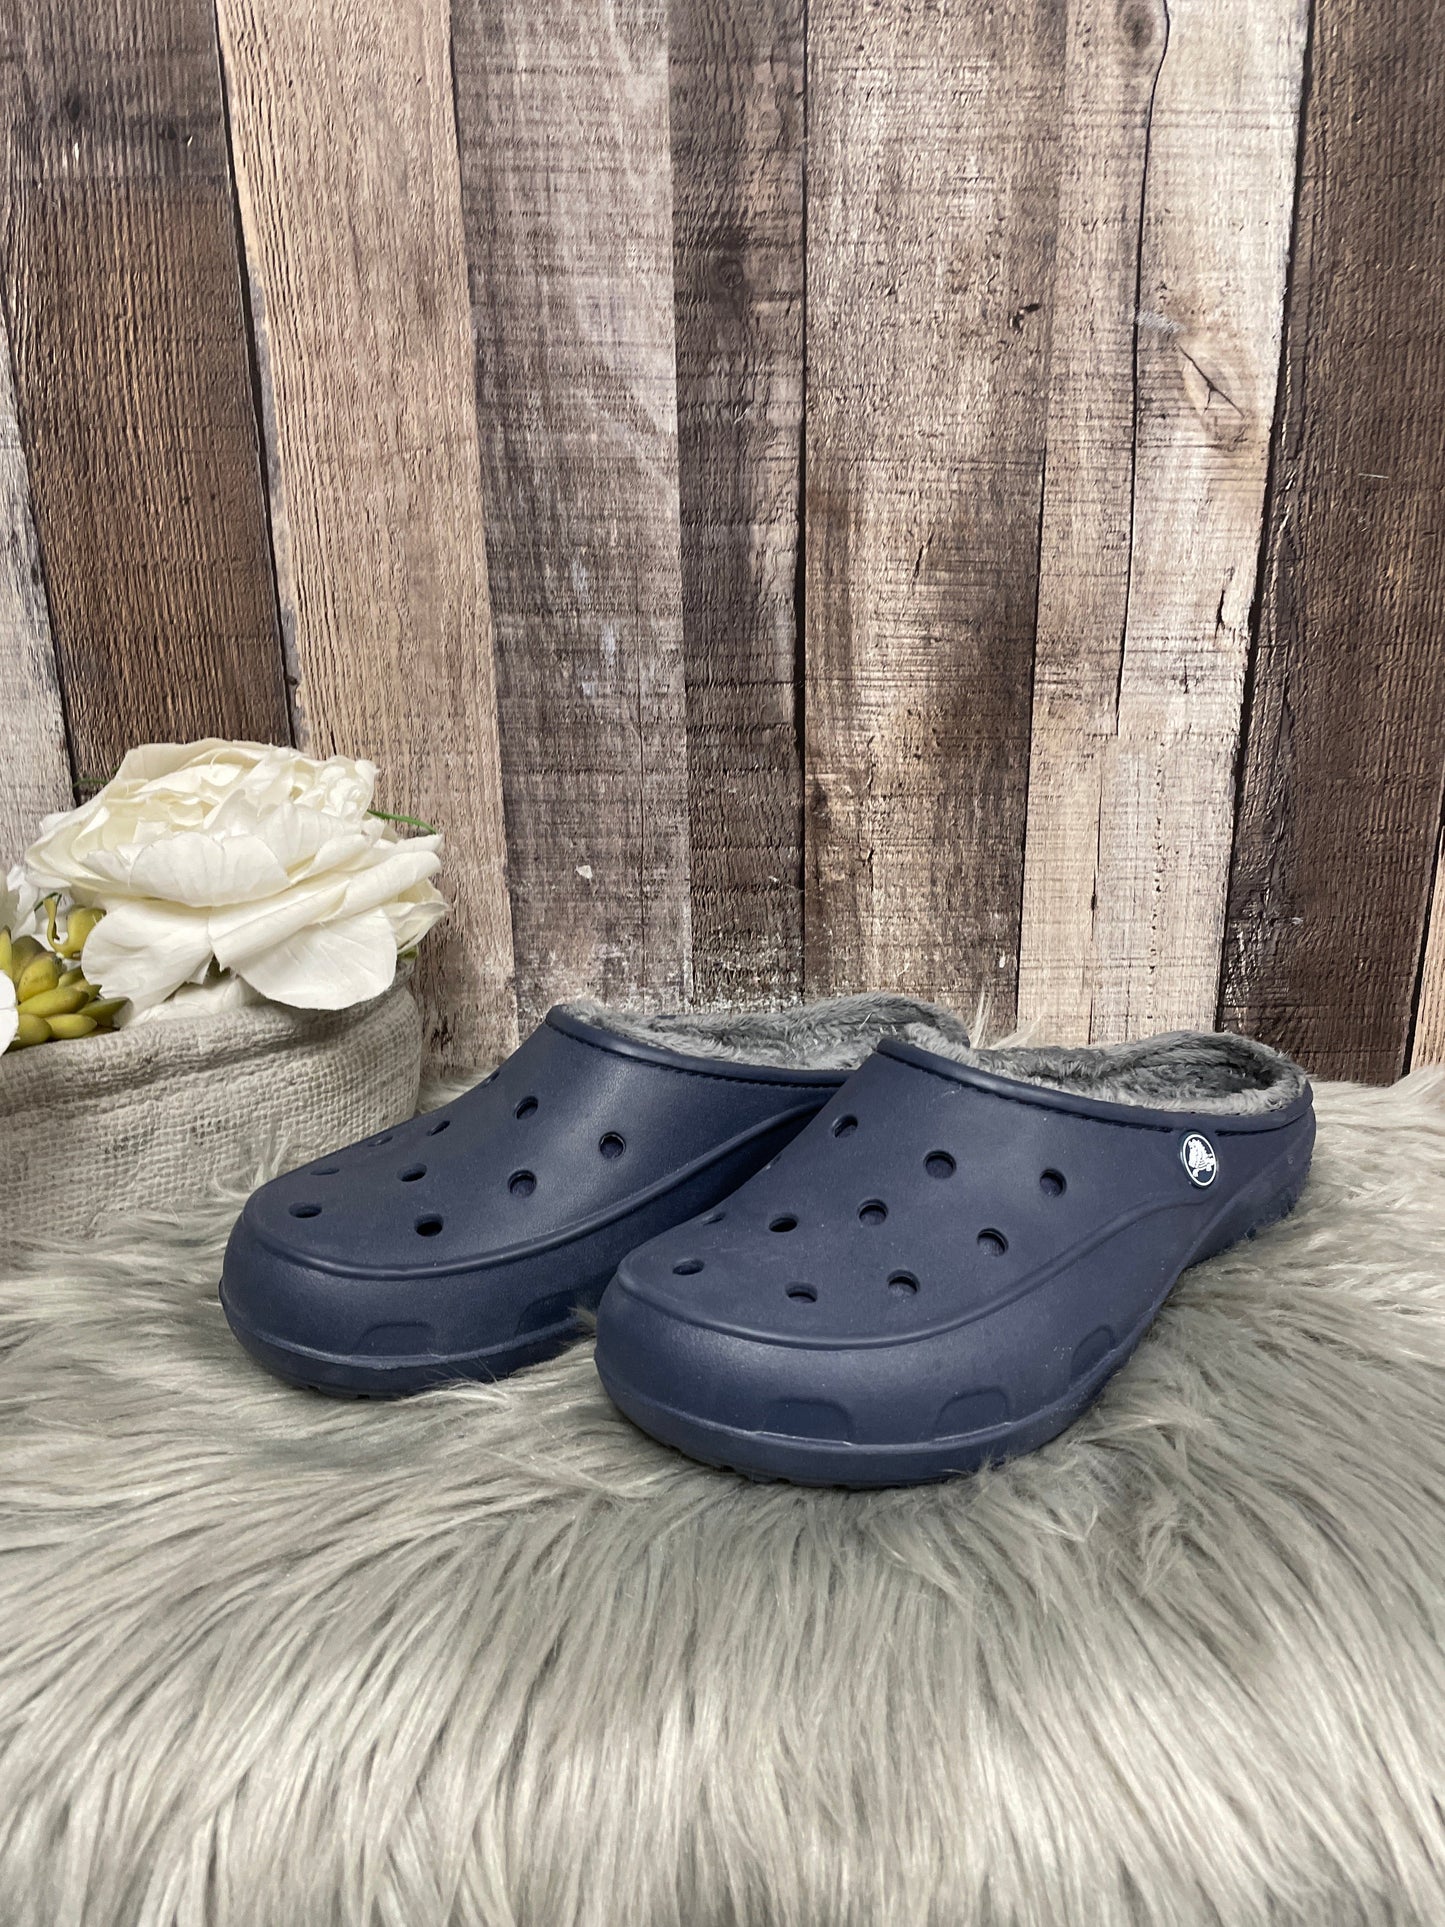 Shoes Flats By Crocs  Size: 8